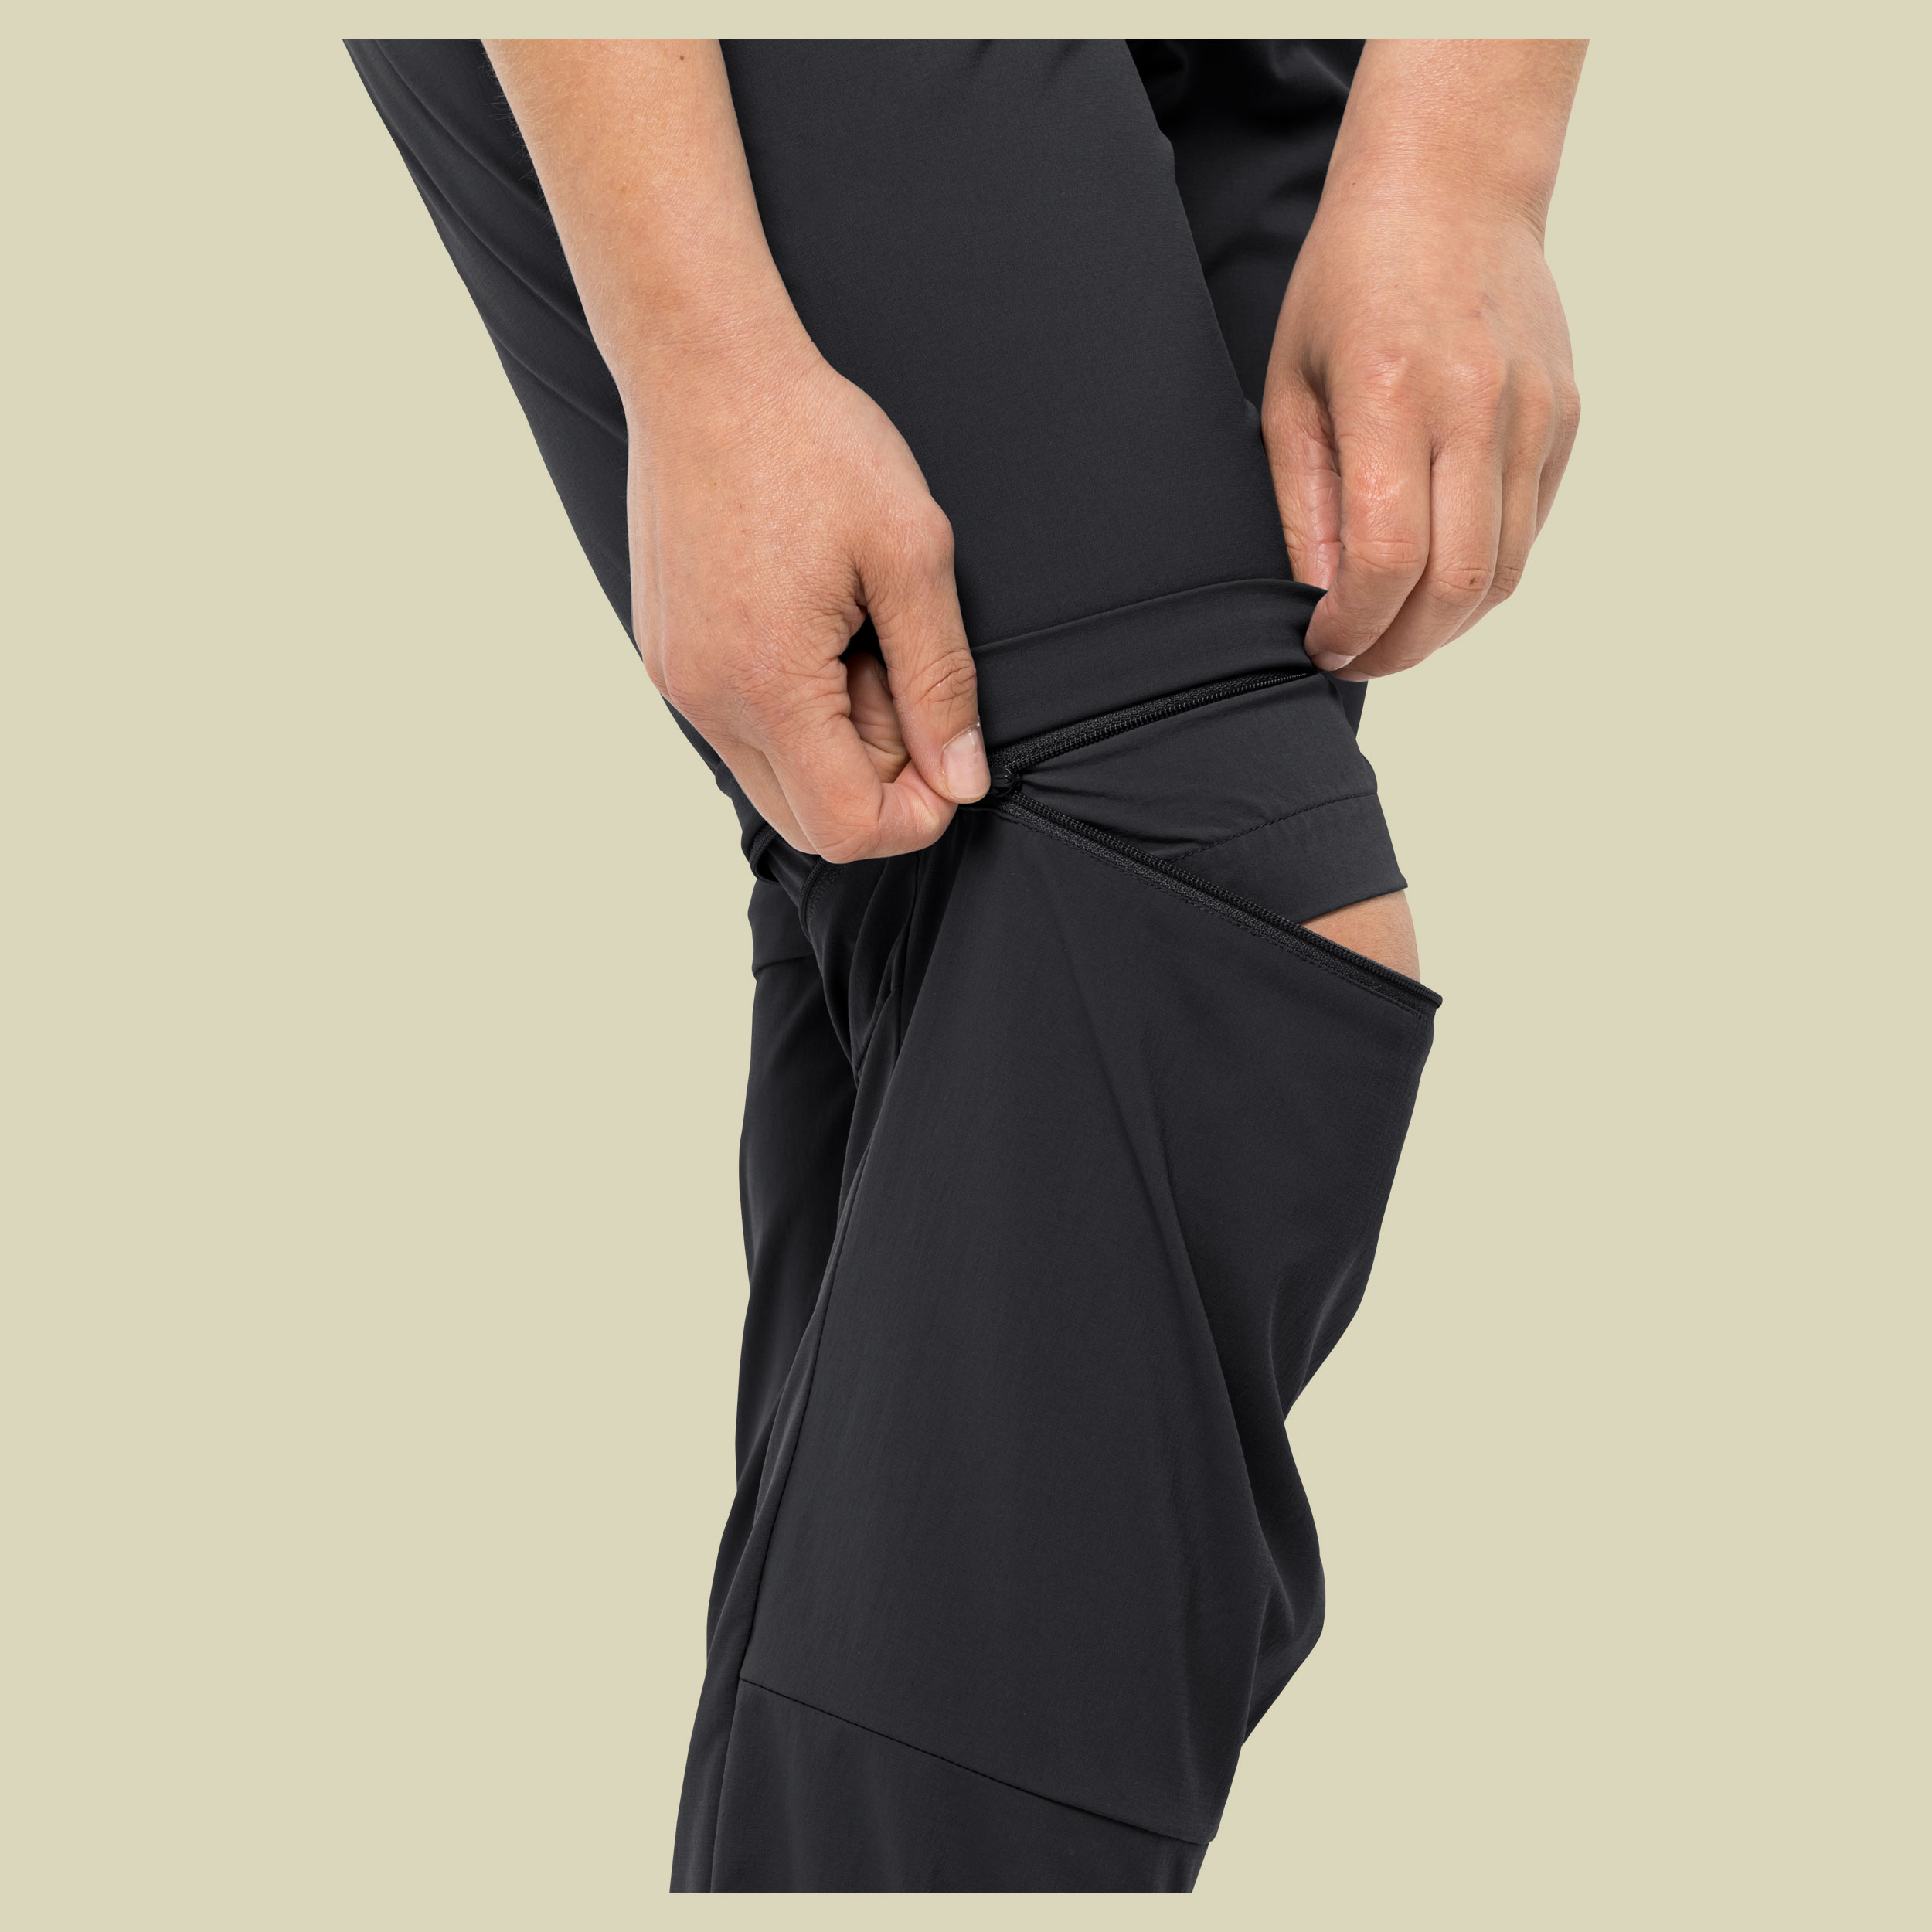 Glastal Zip Off Pants Women Größe 36 Farbe black